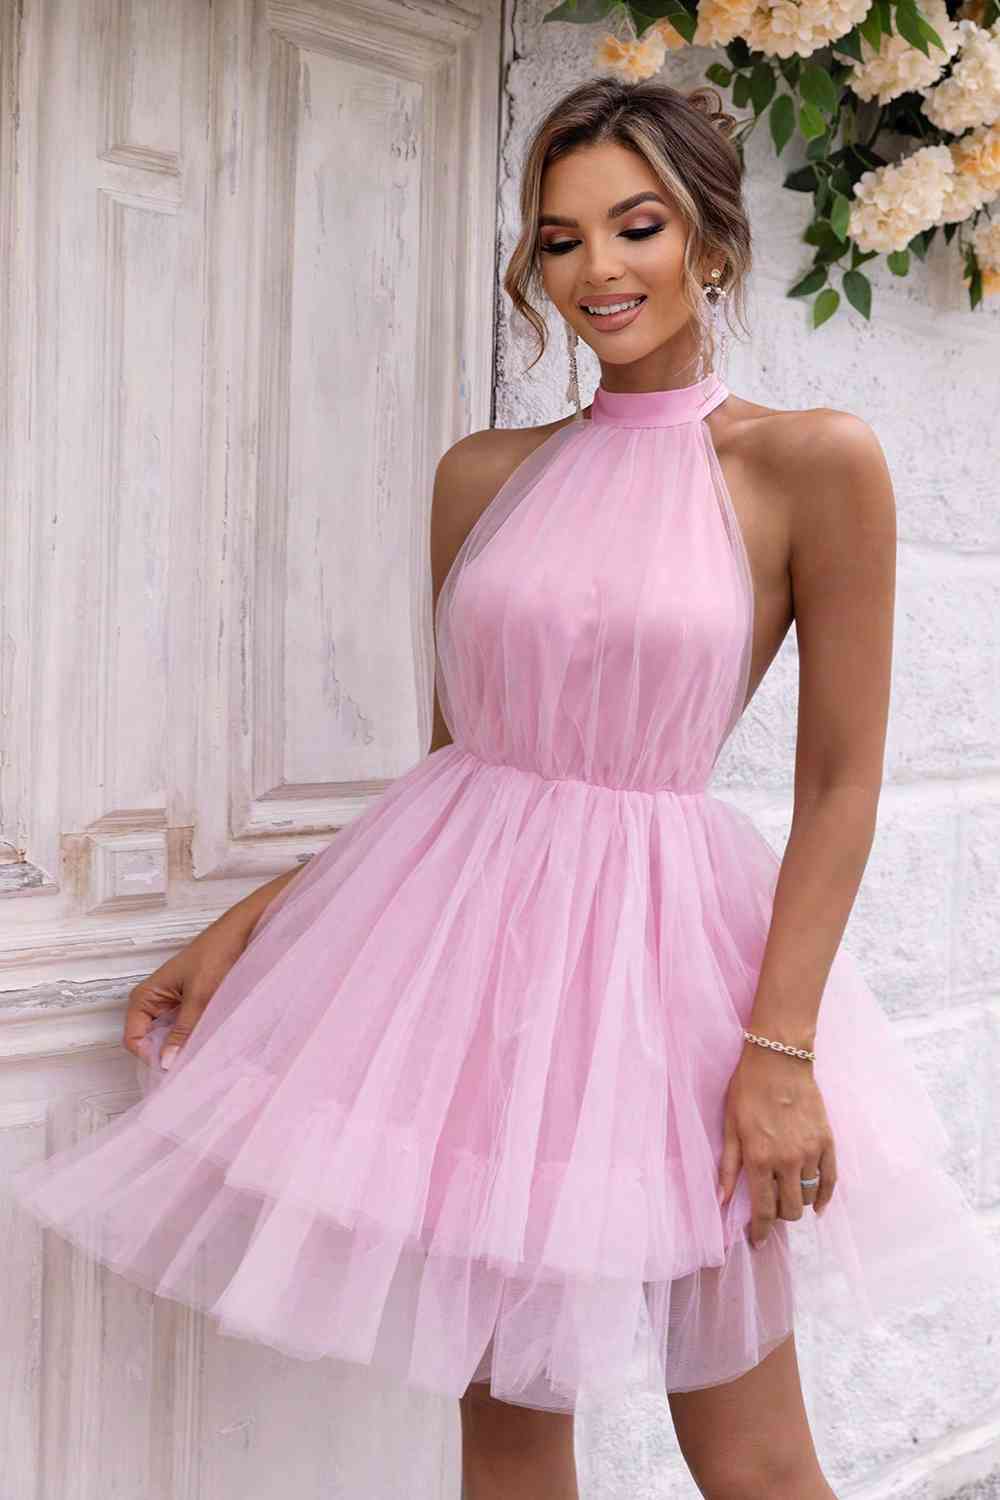 Halter Neck Backless Mesh Dress - Blush Pink / XS - All Dresses - Dresses - 1 - 2024